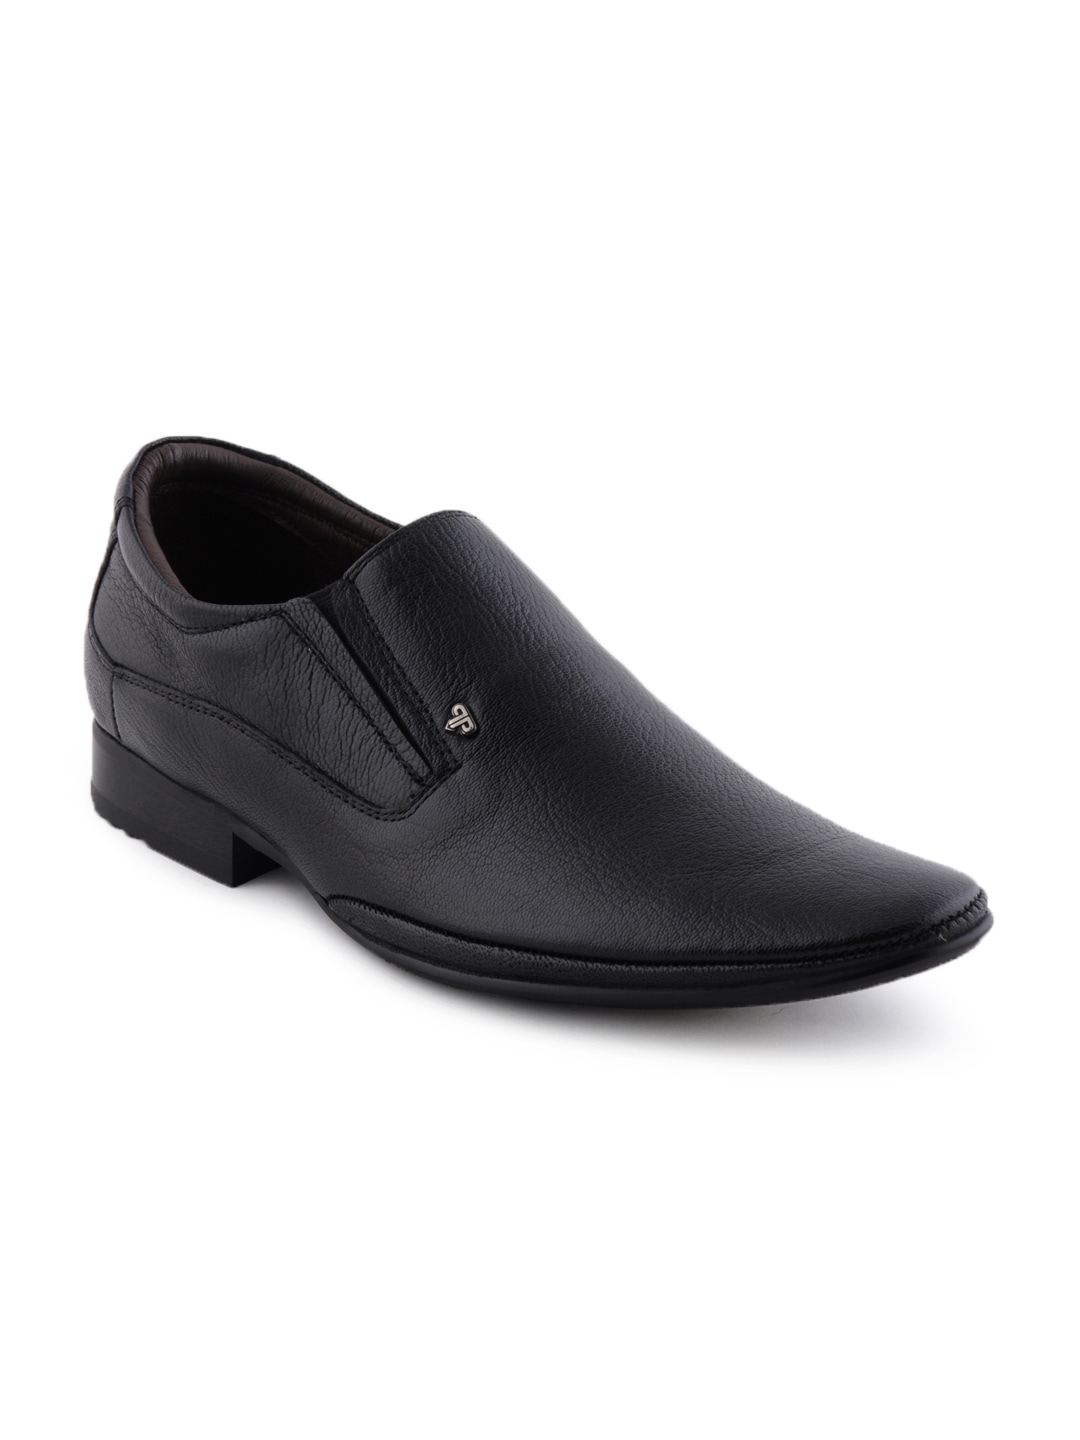 Provogue Men Black Formal Shoes